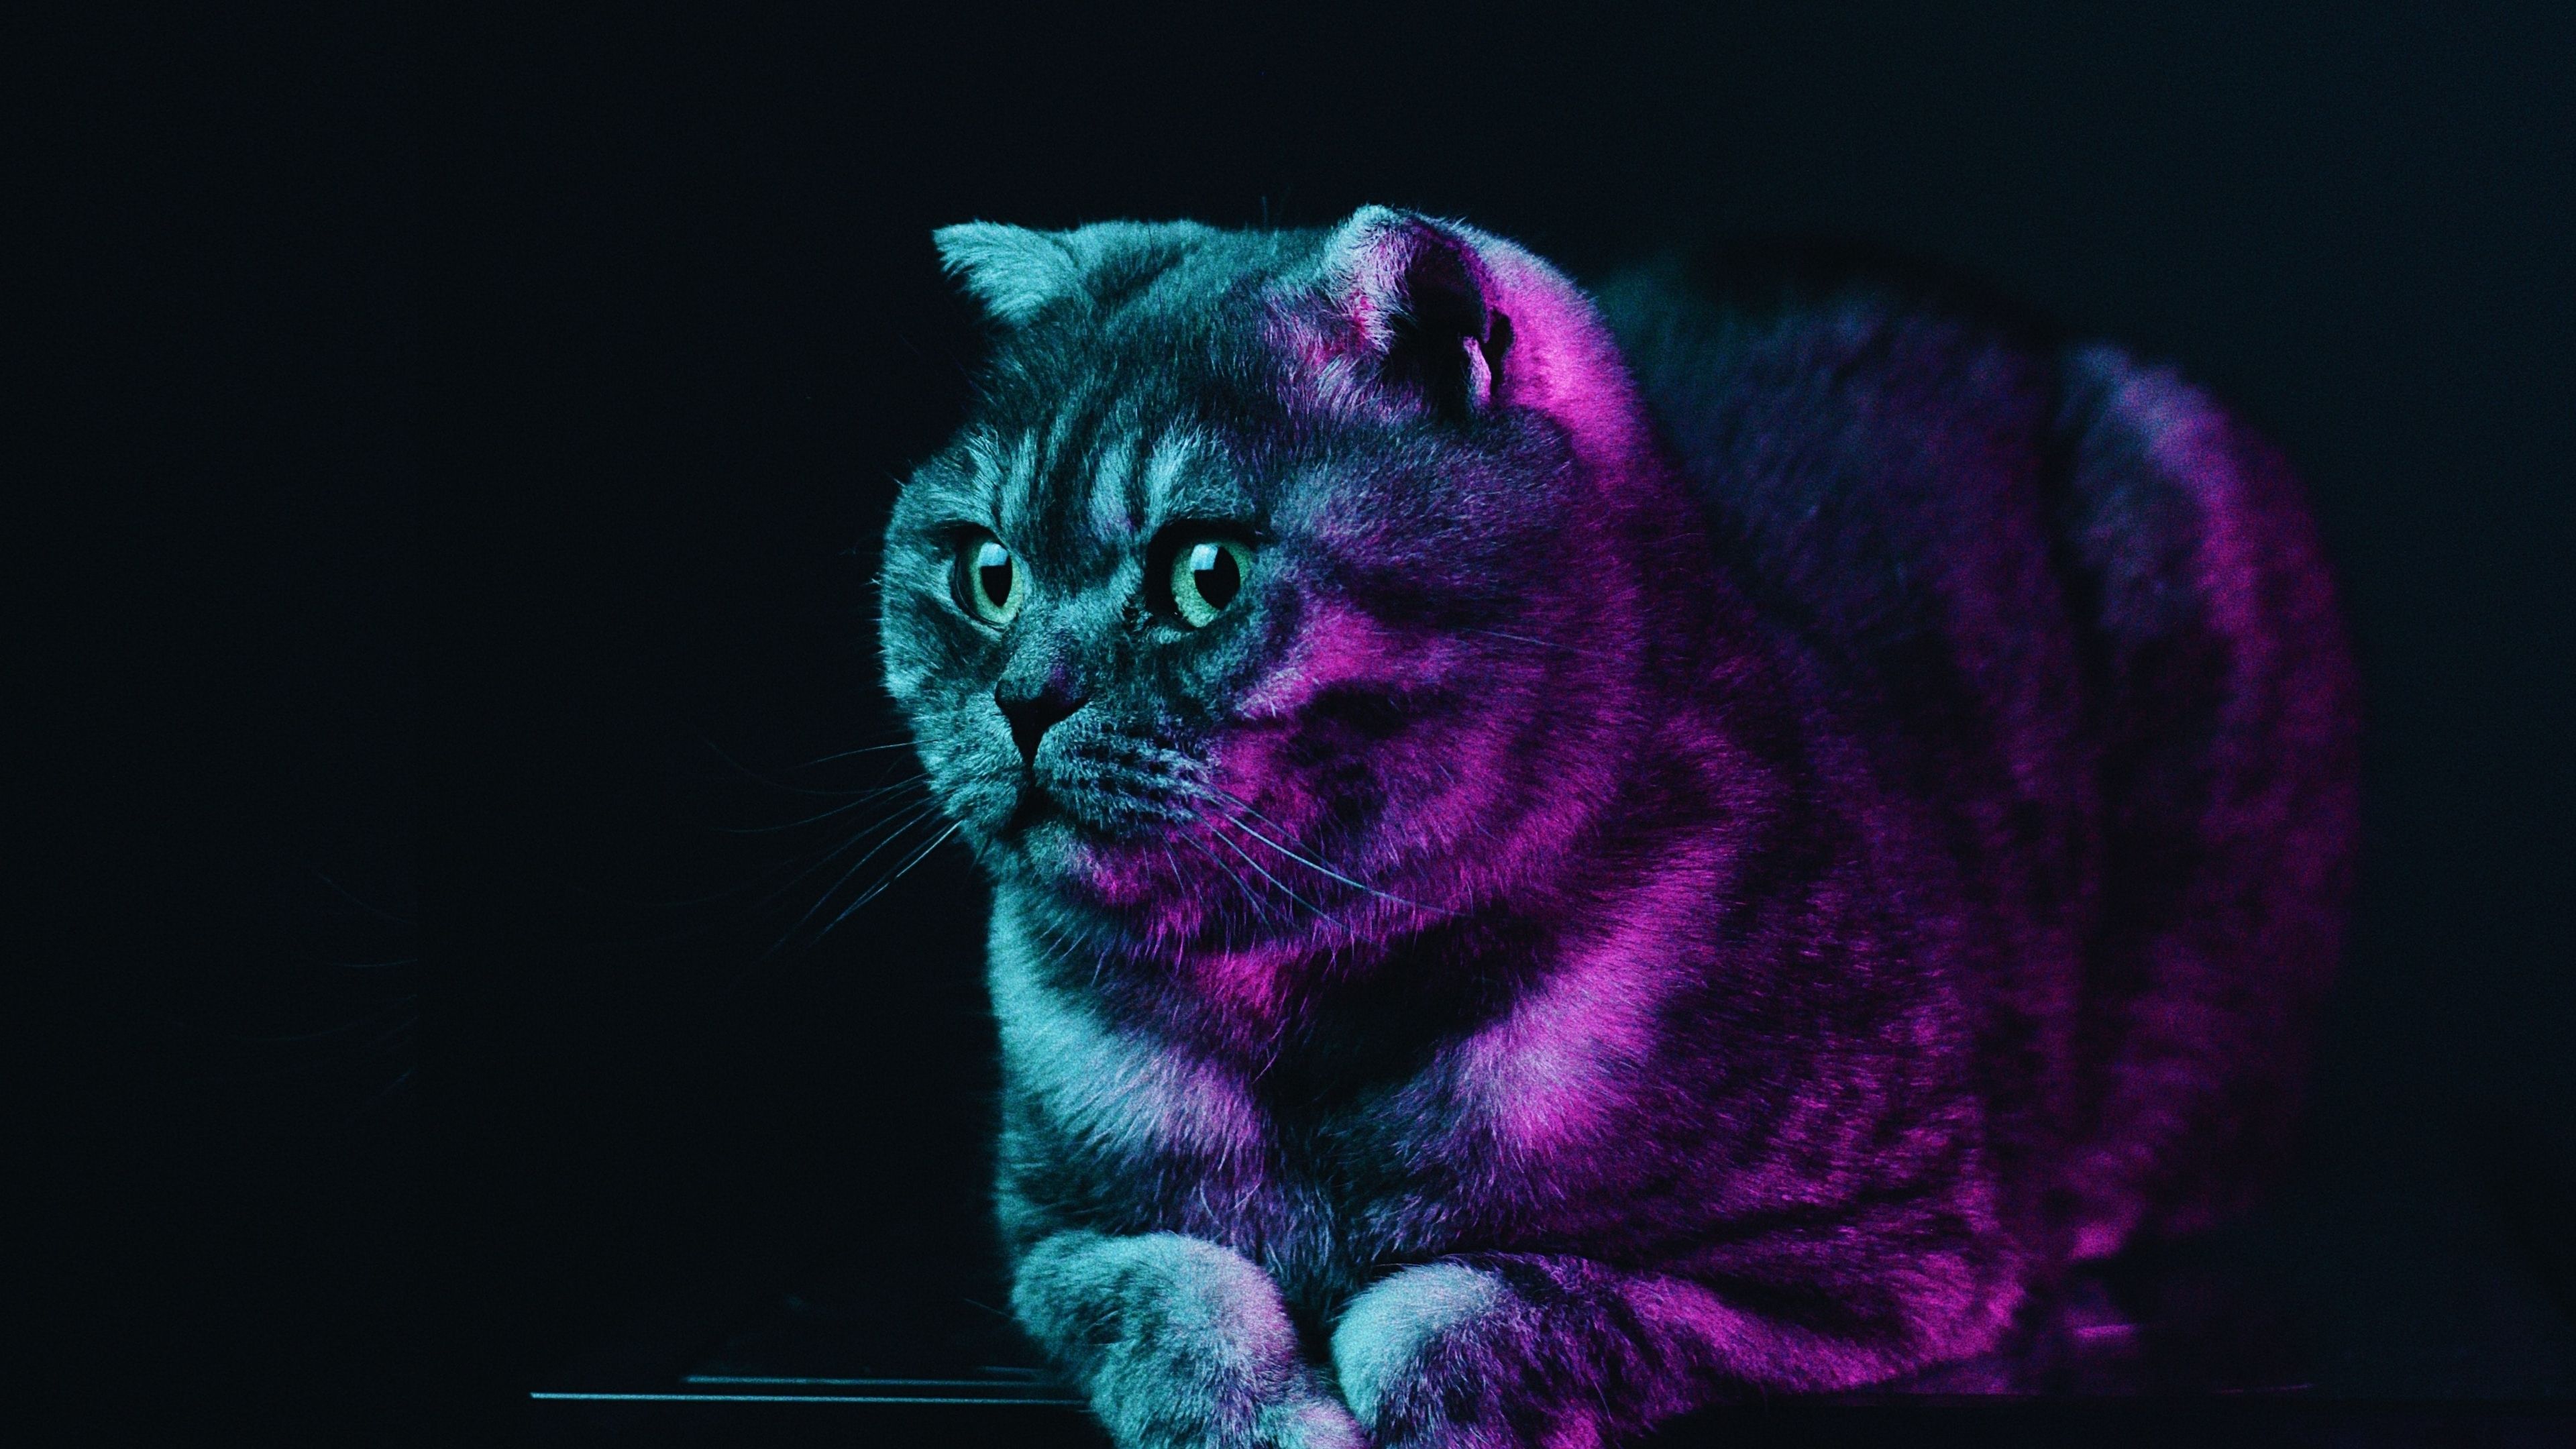 Download 3840x2160 wallpaper fat cat, neon glow, animal, 4k, uhd 16: widescreen, 3840x2160 HD image, background, 24000